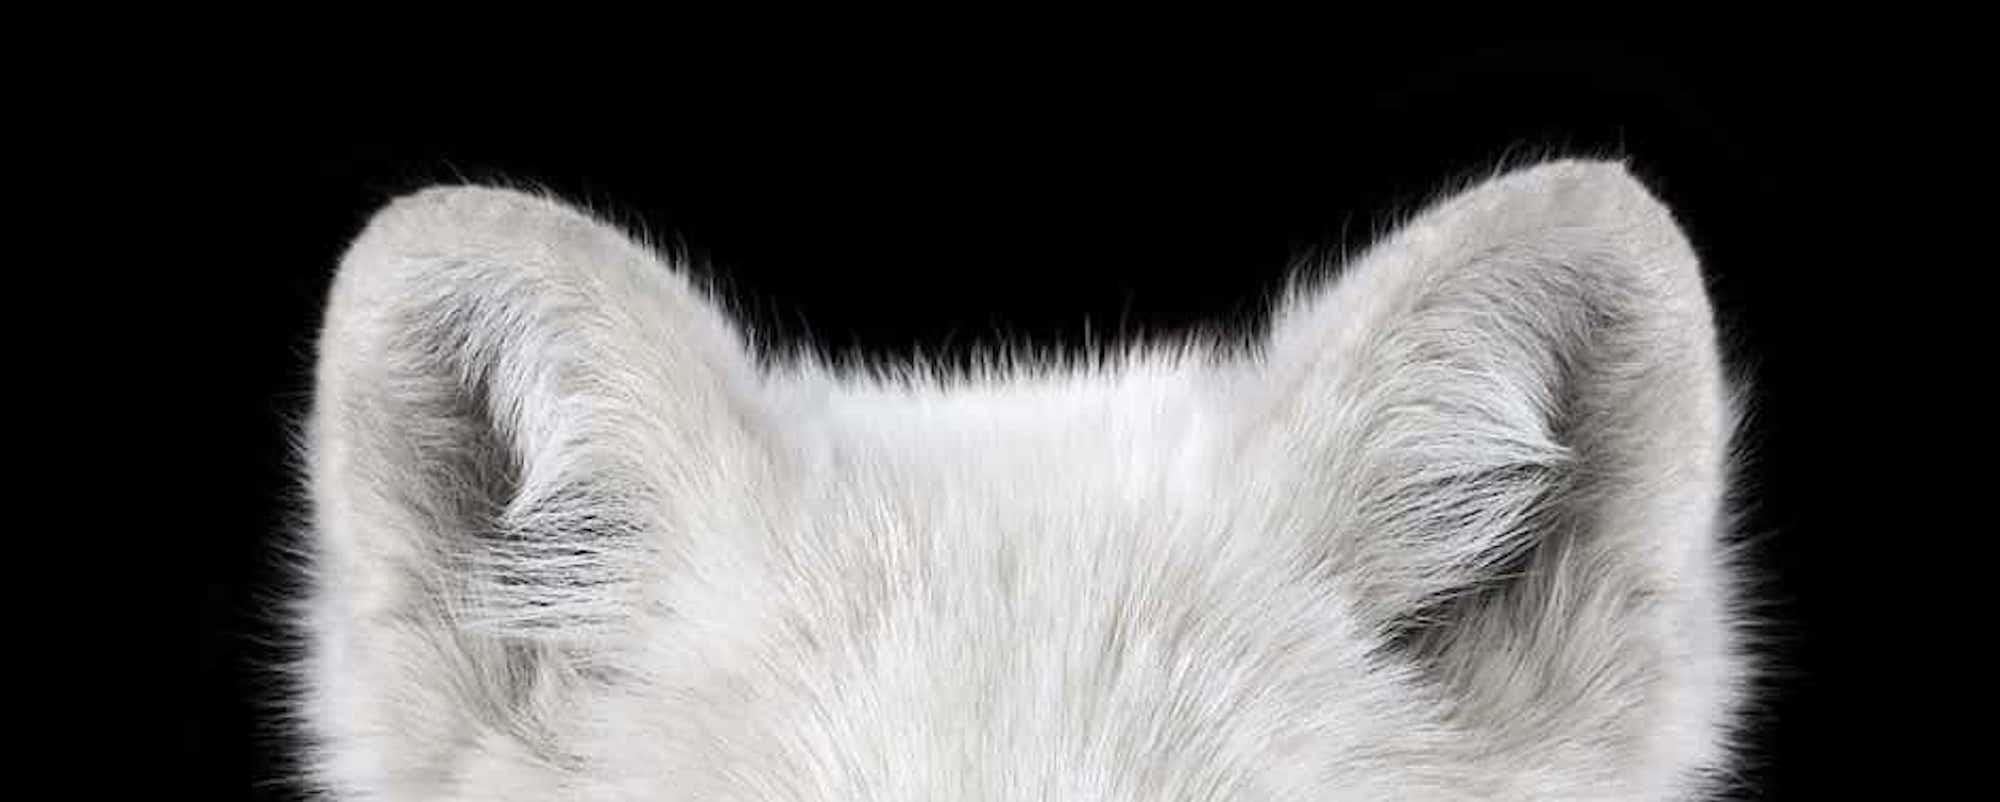 Arctic Fox #1 by Brad Wilson - Animal portrait photography For Sale 3